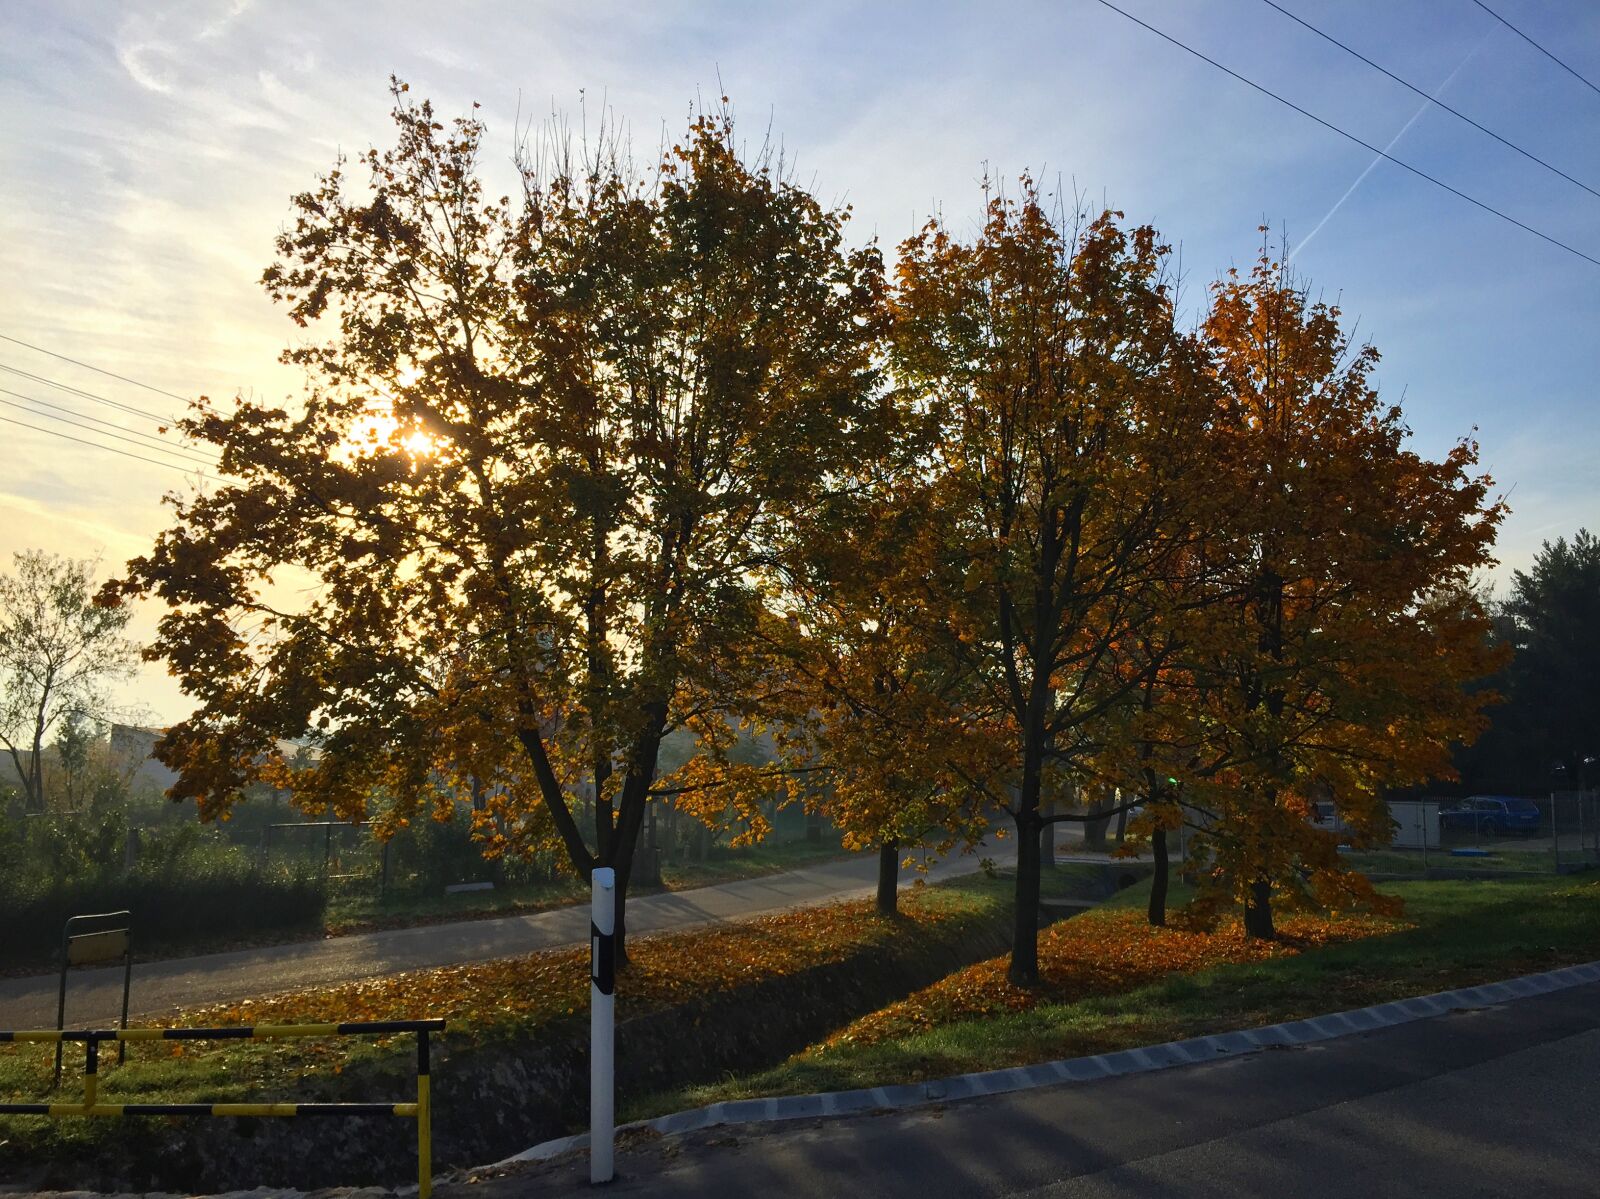 Apple iPhone 6 sample photo. Autumn, nature, naturephoto, color photography